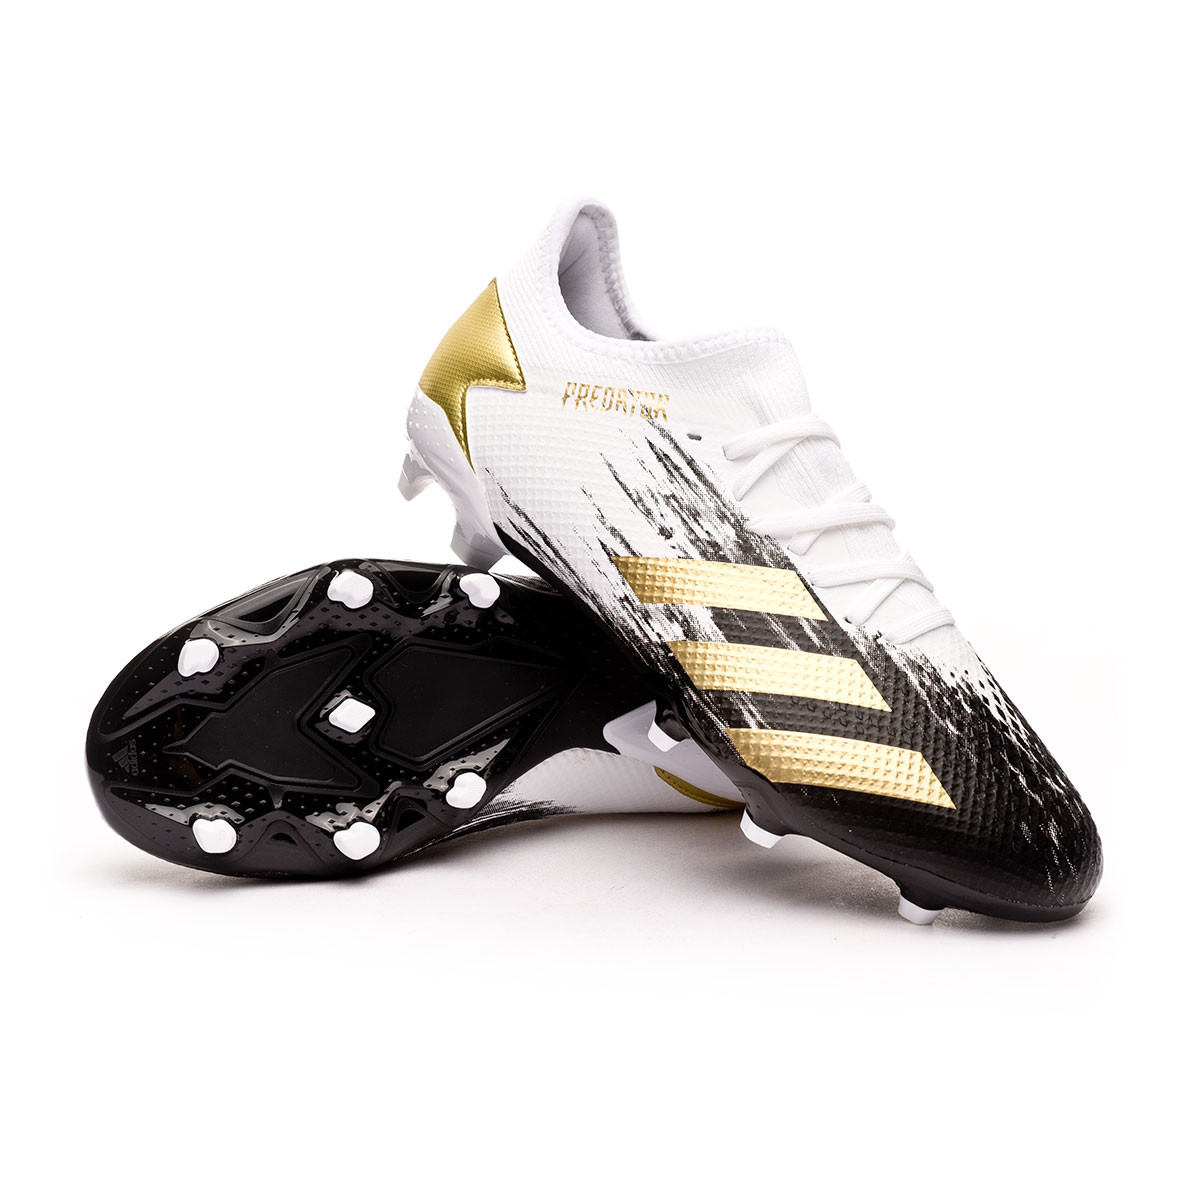 Football Boots adidas Predator 20.3 L 